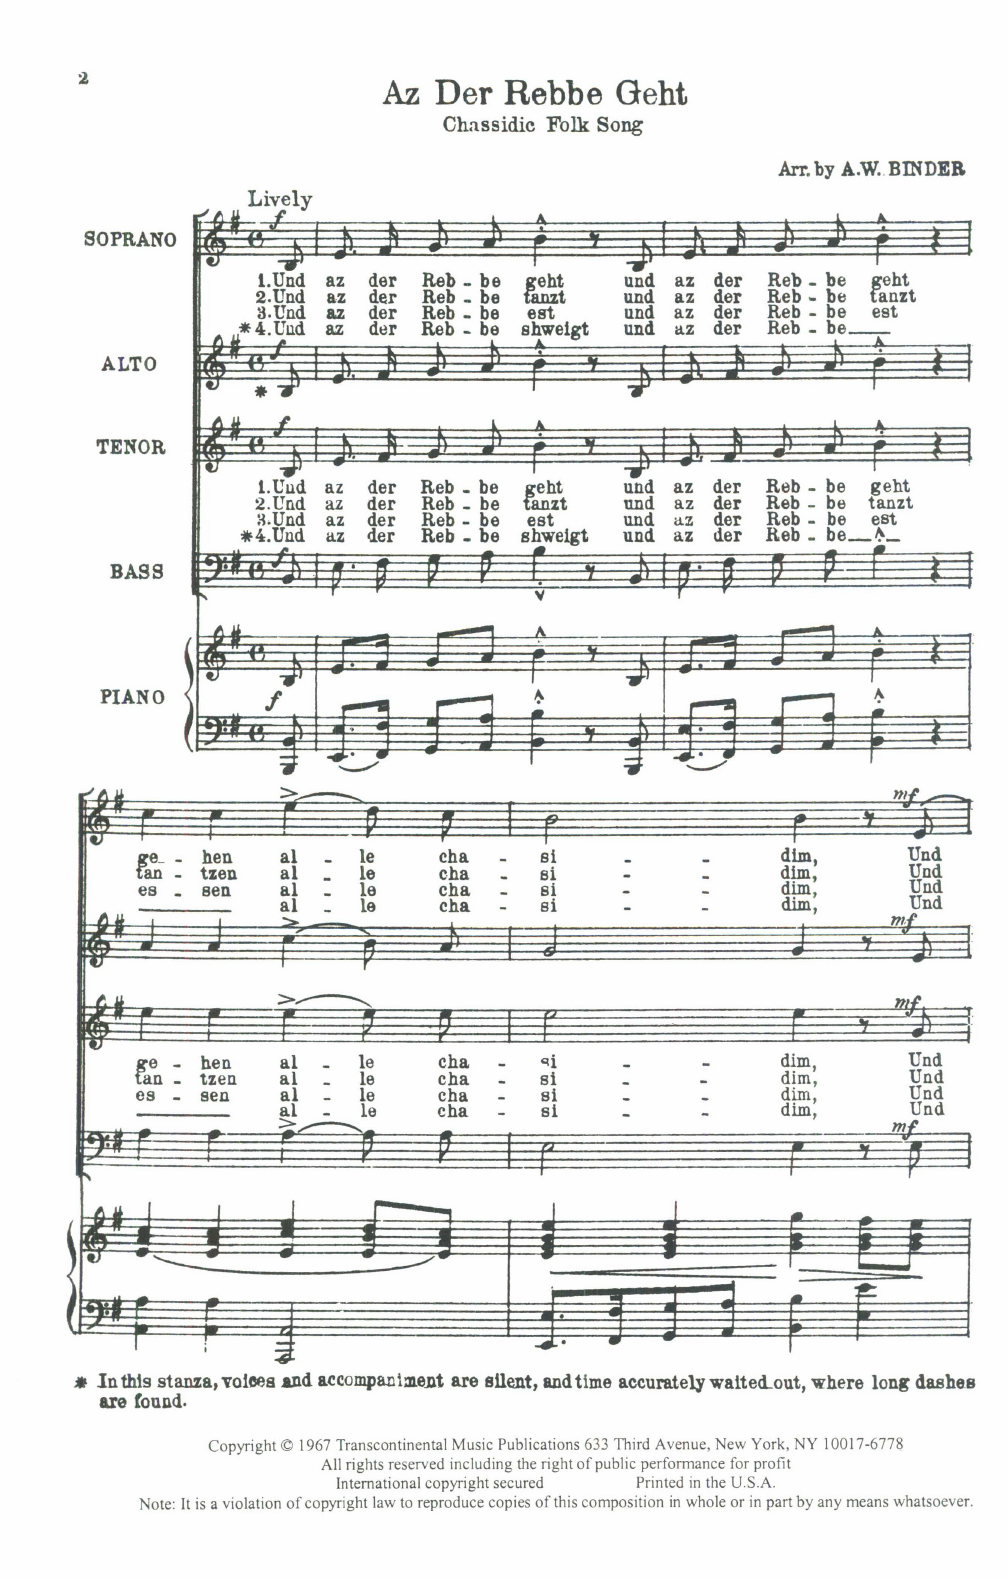 Chassidic Folk Song Az Der Rebbe Geht (arr. A.W. Binder) sheet music notes and chords arranged for SATB Choir